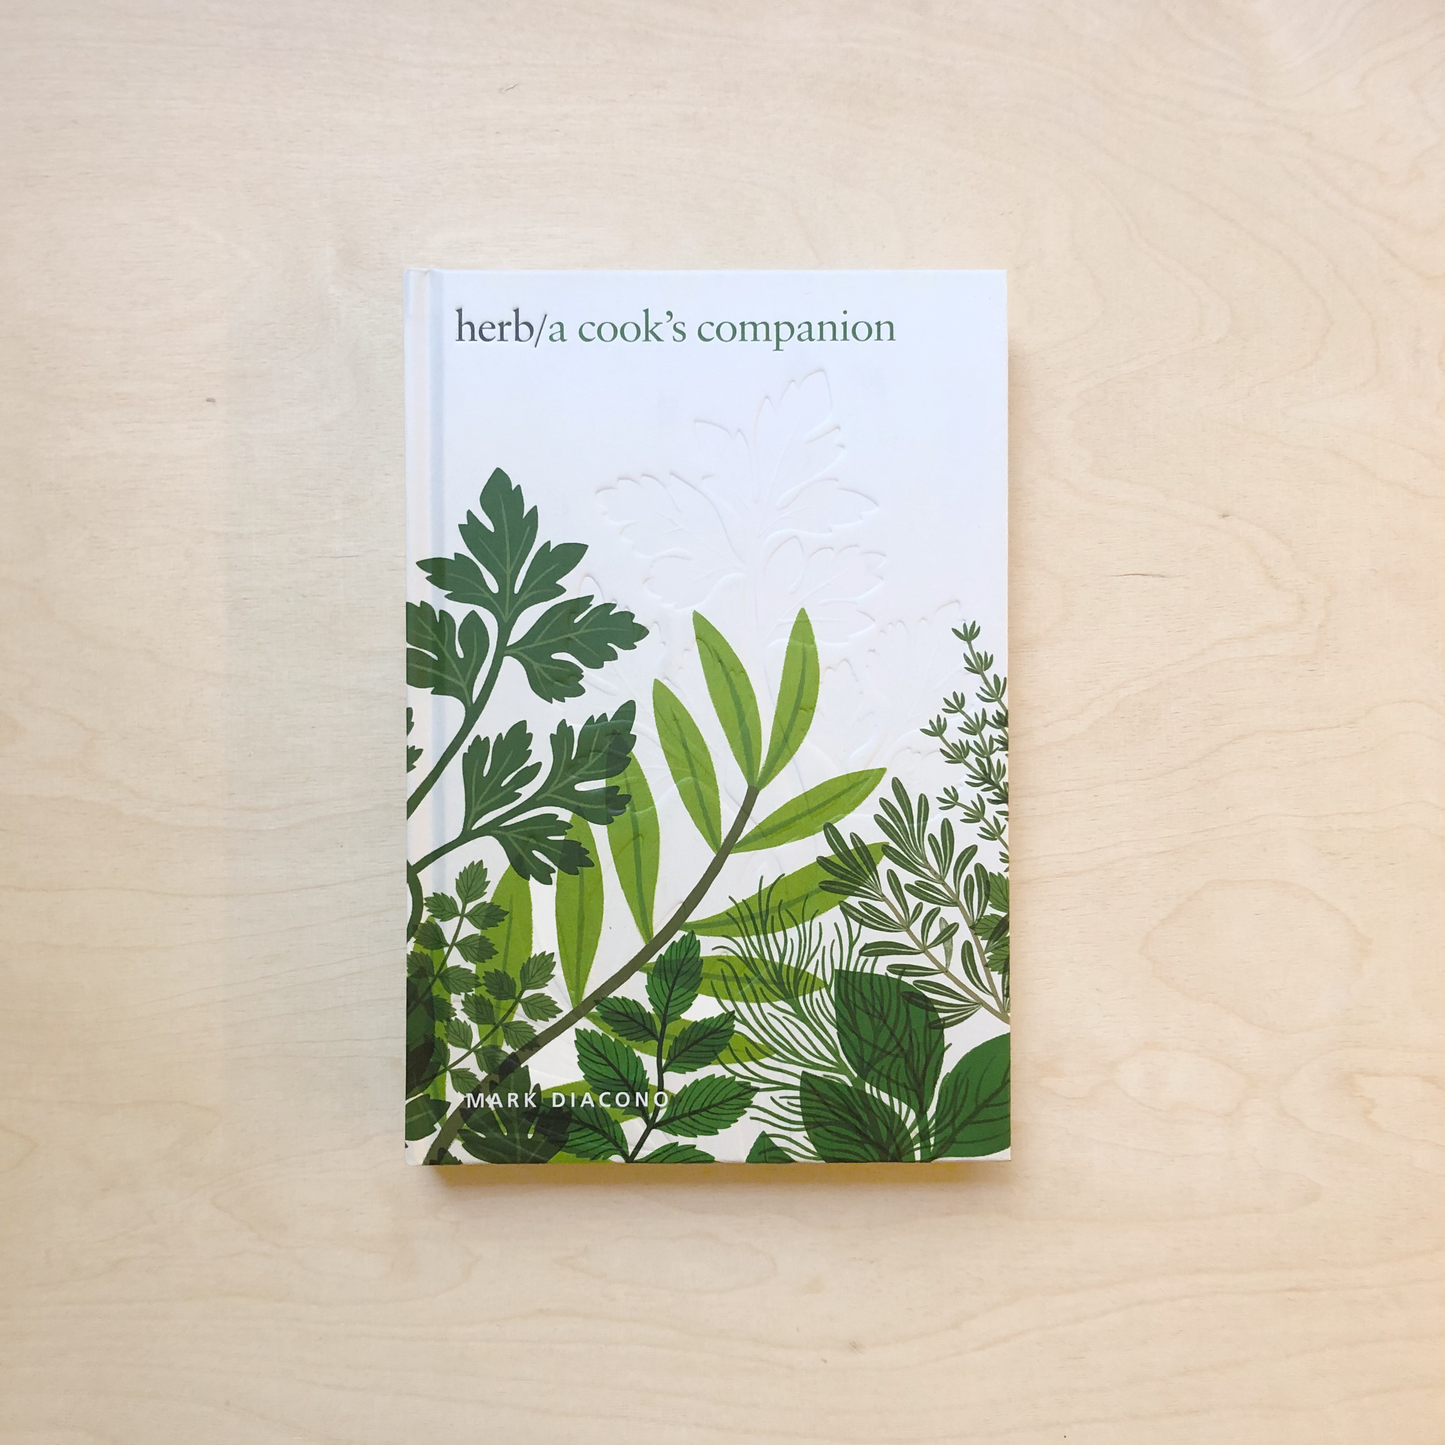 Herb - A Cook's Companion